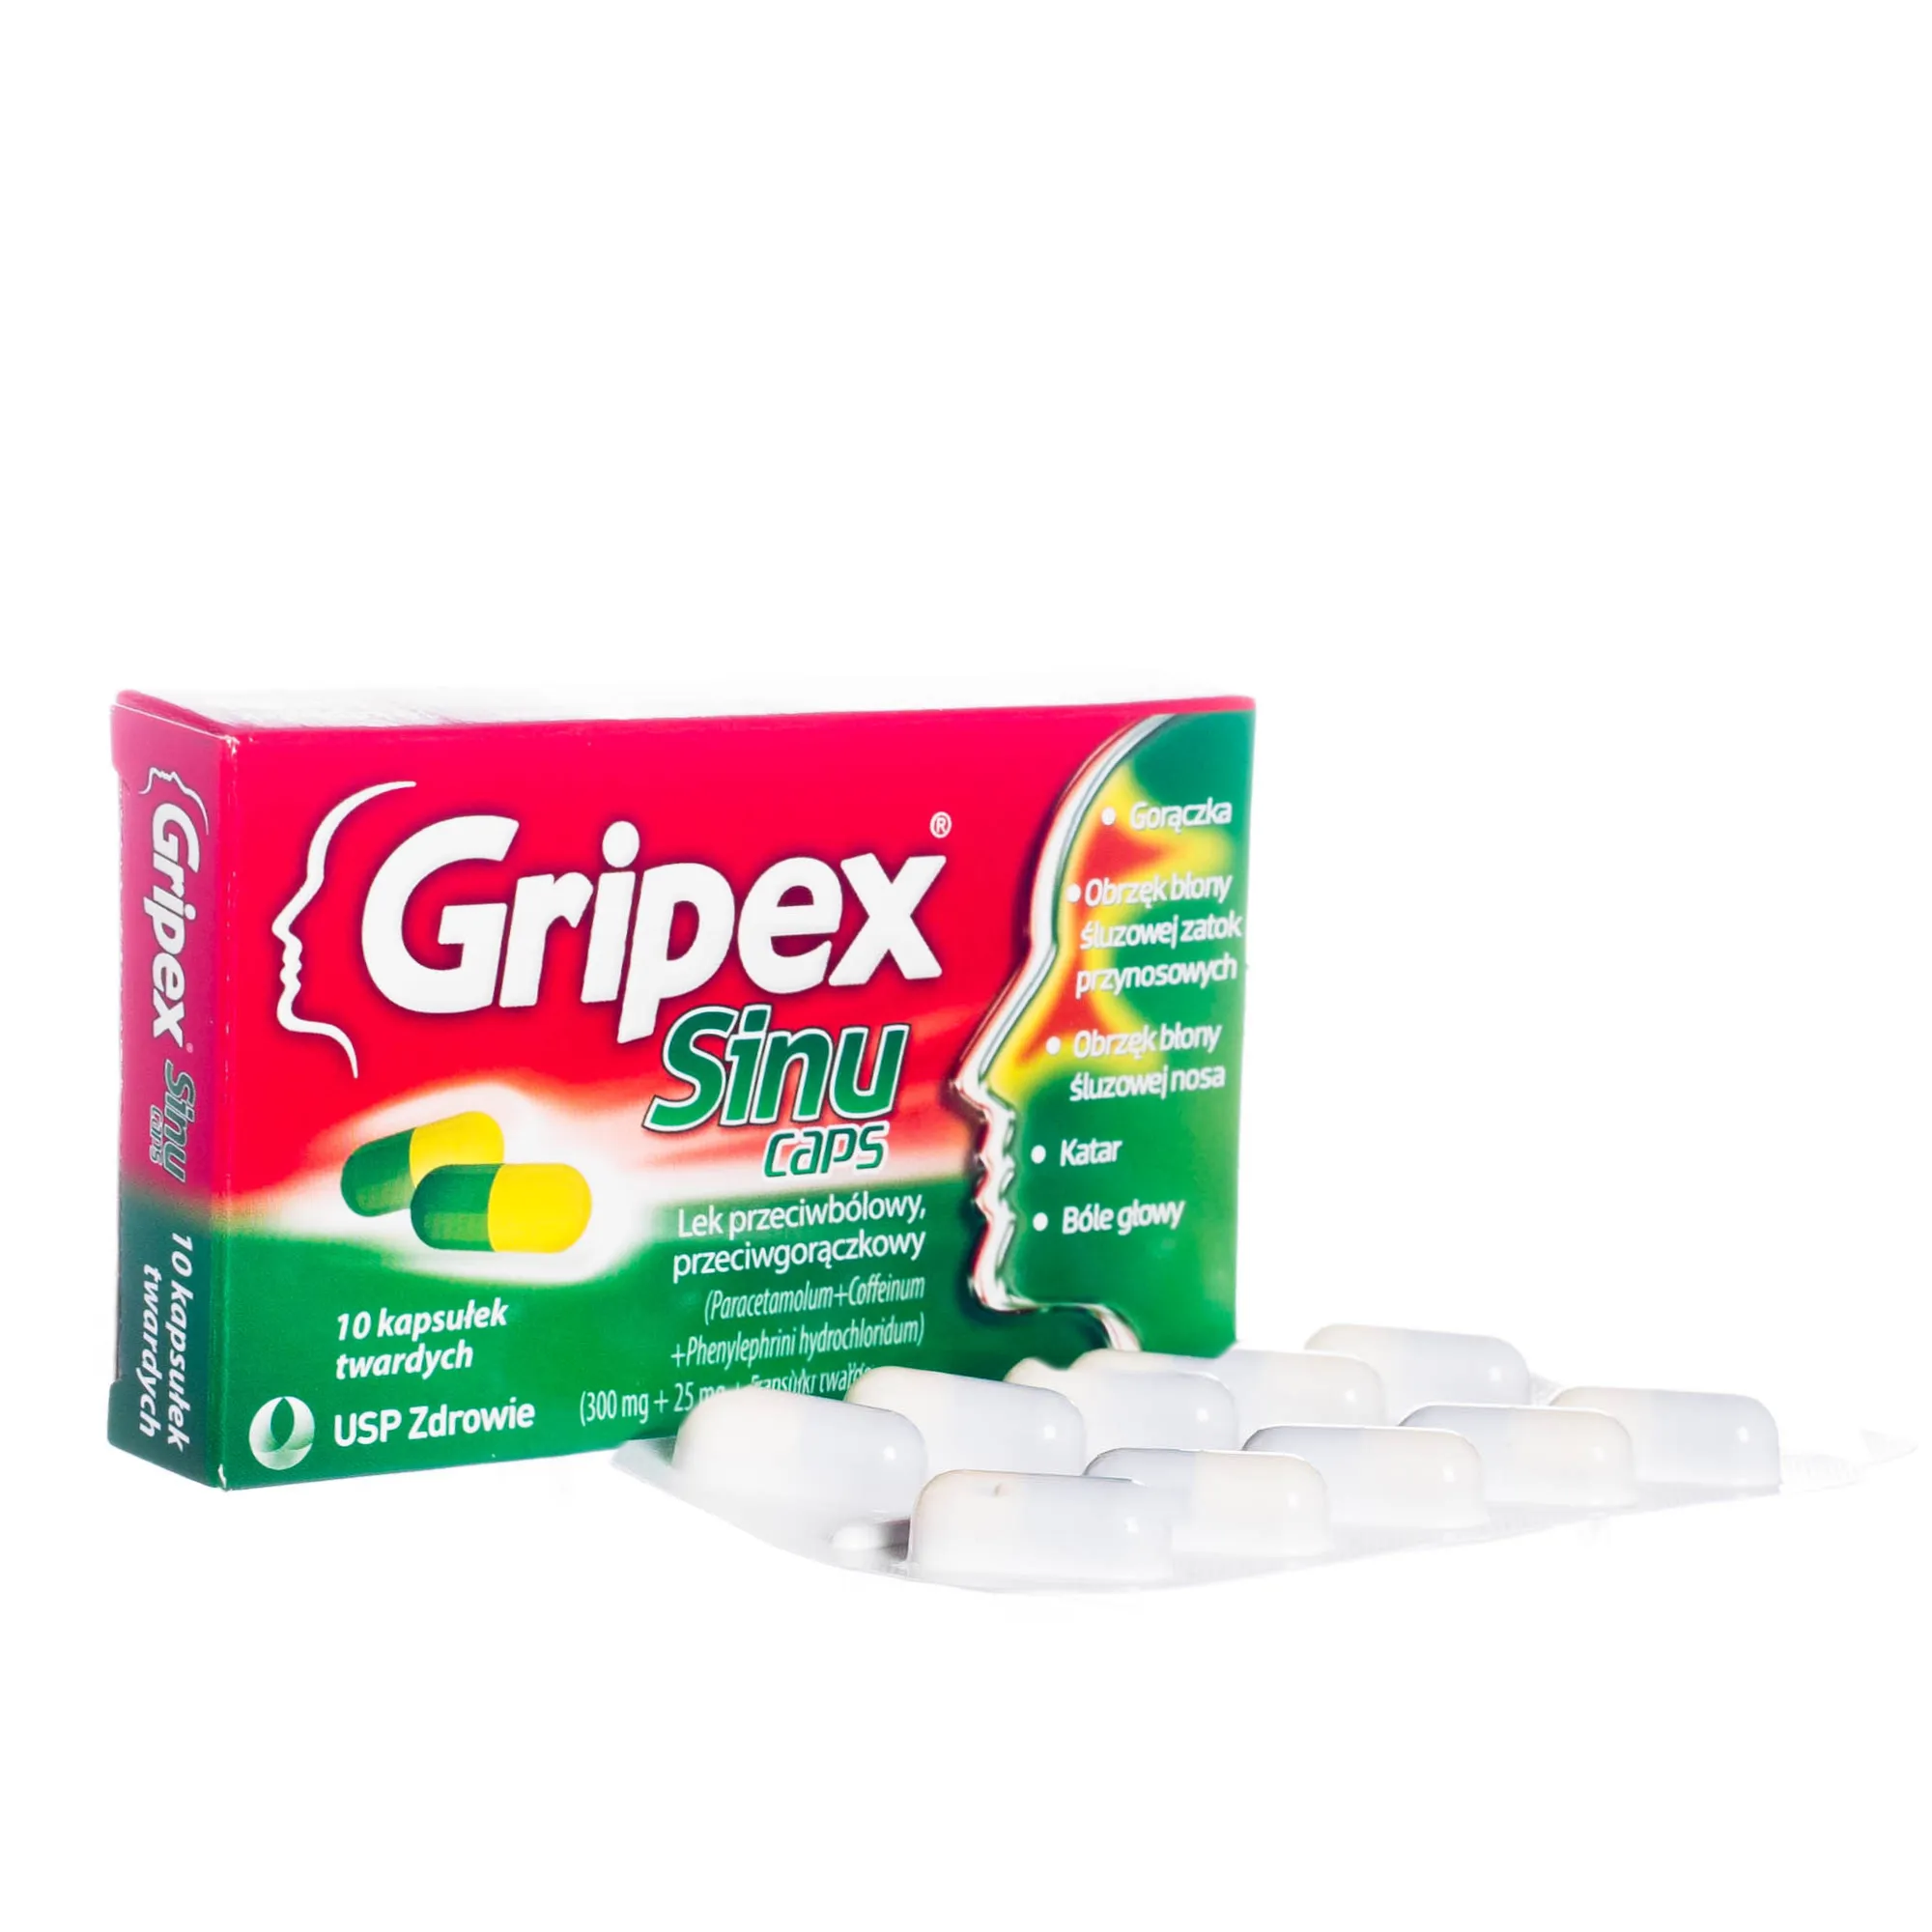 Gripex sinucaps